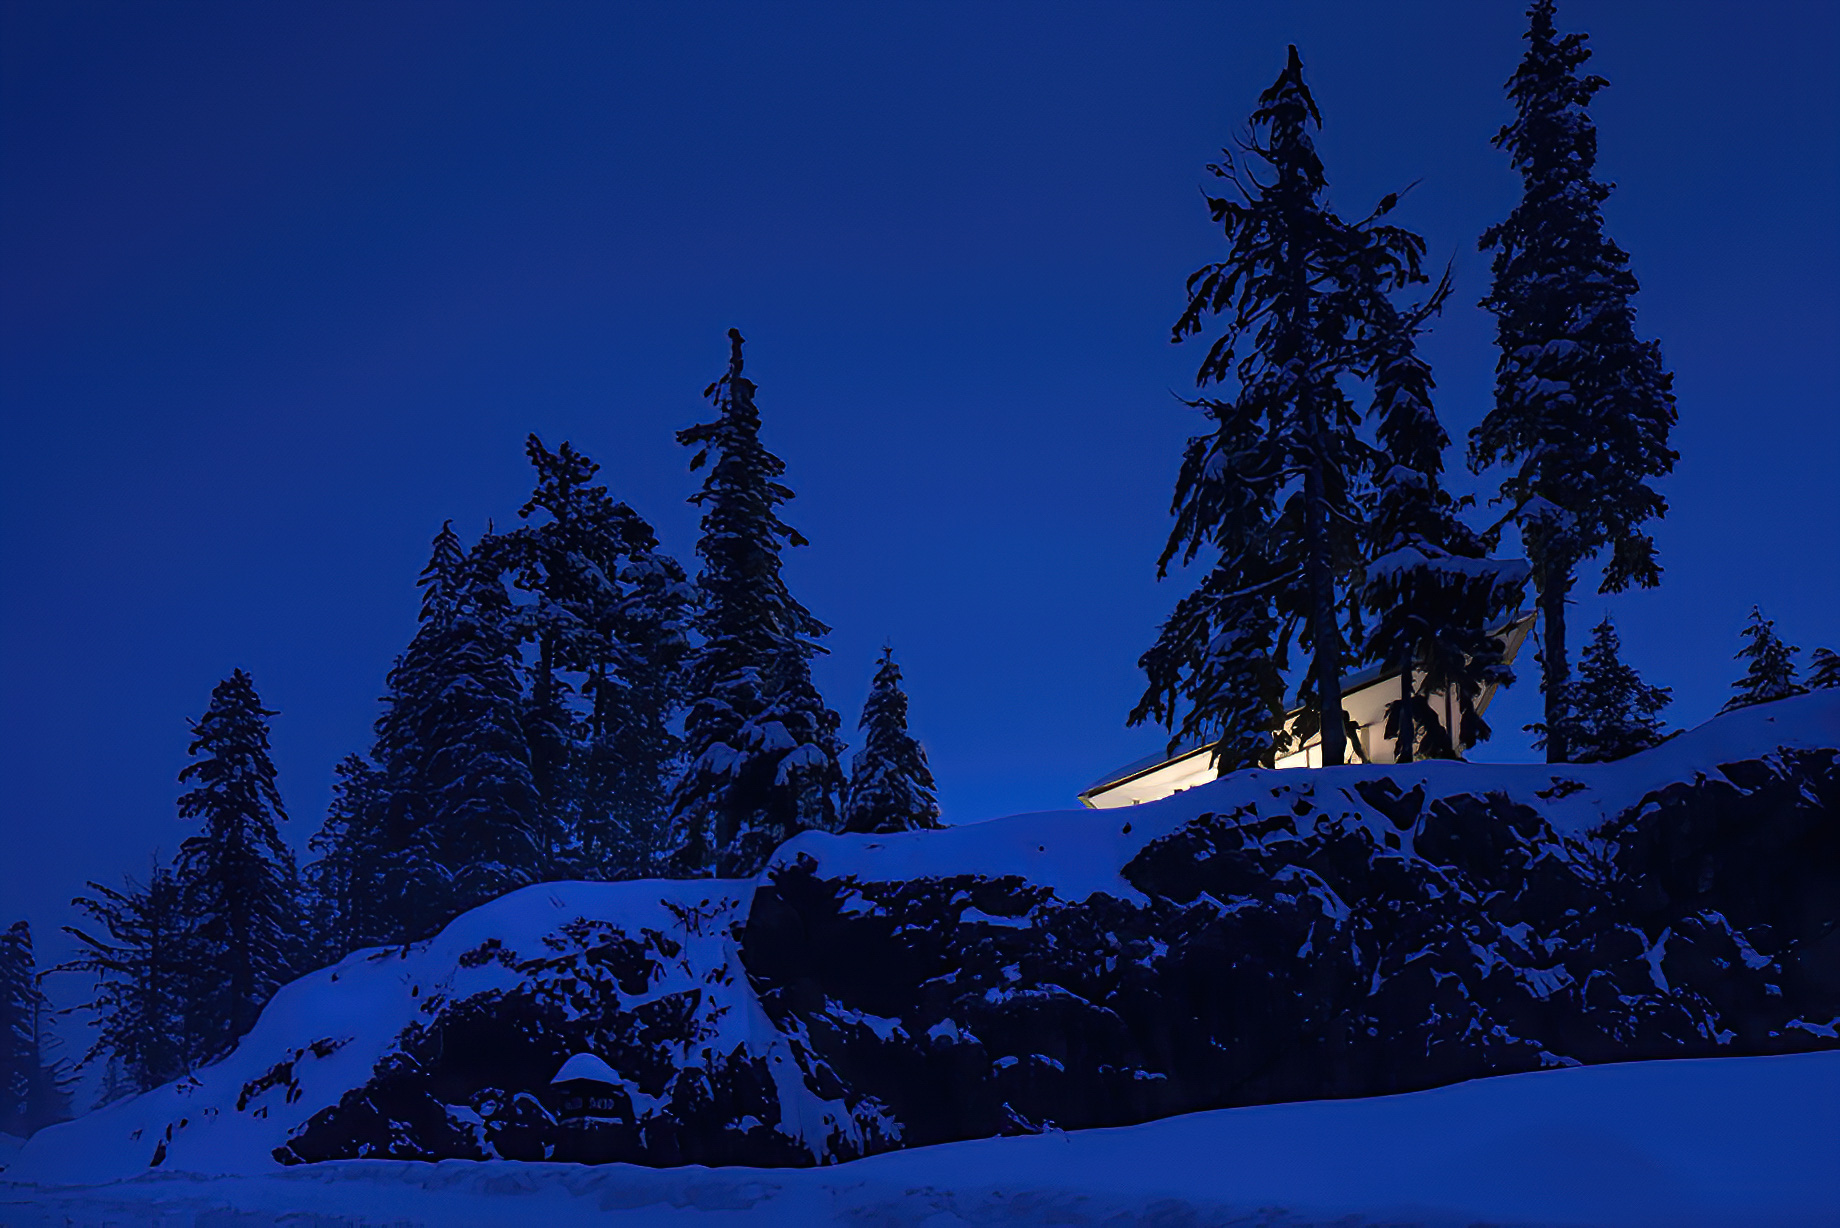 Amanderu Estate Luxury Ski Chalet – Stonebridge Dr, Whistler, BC, Canada